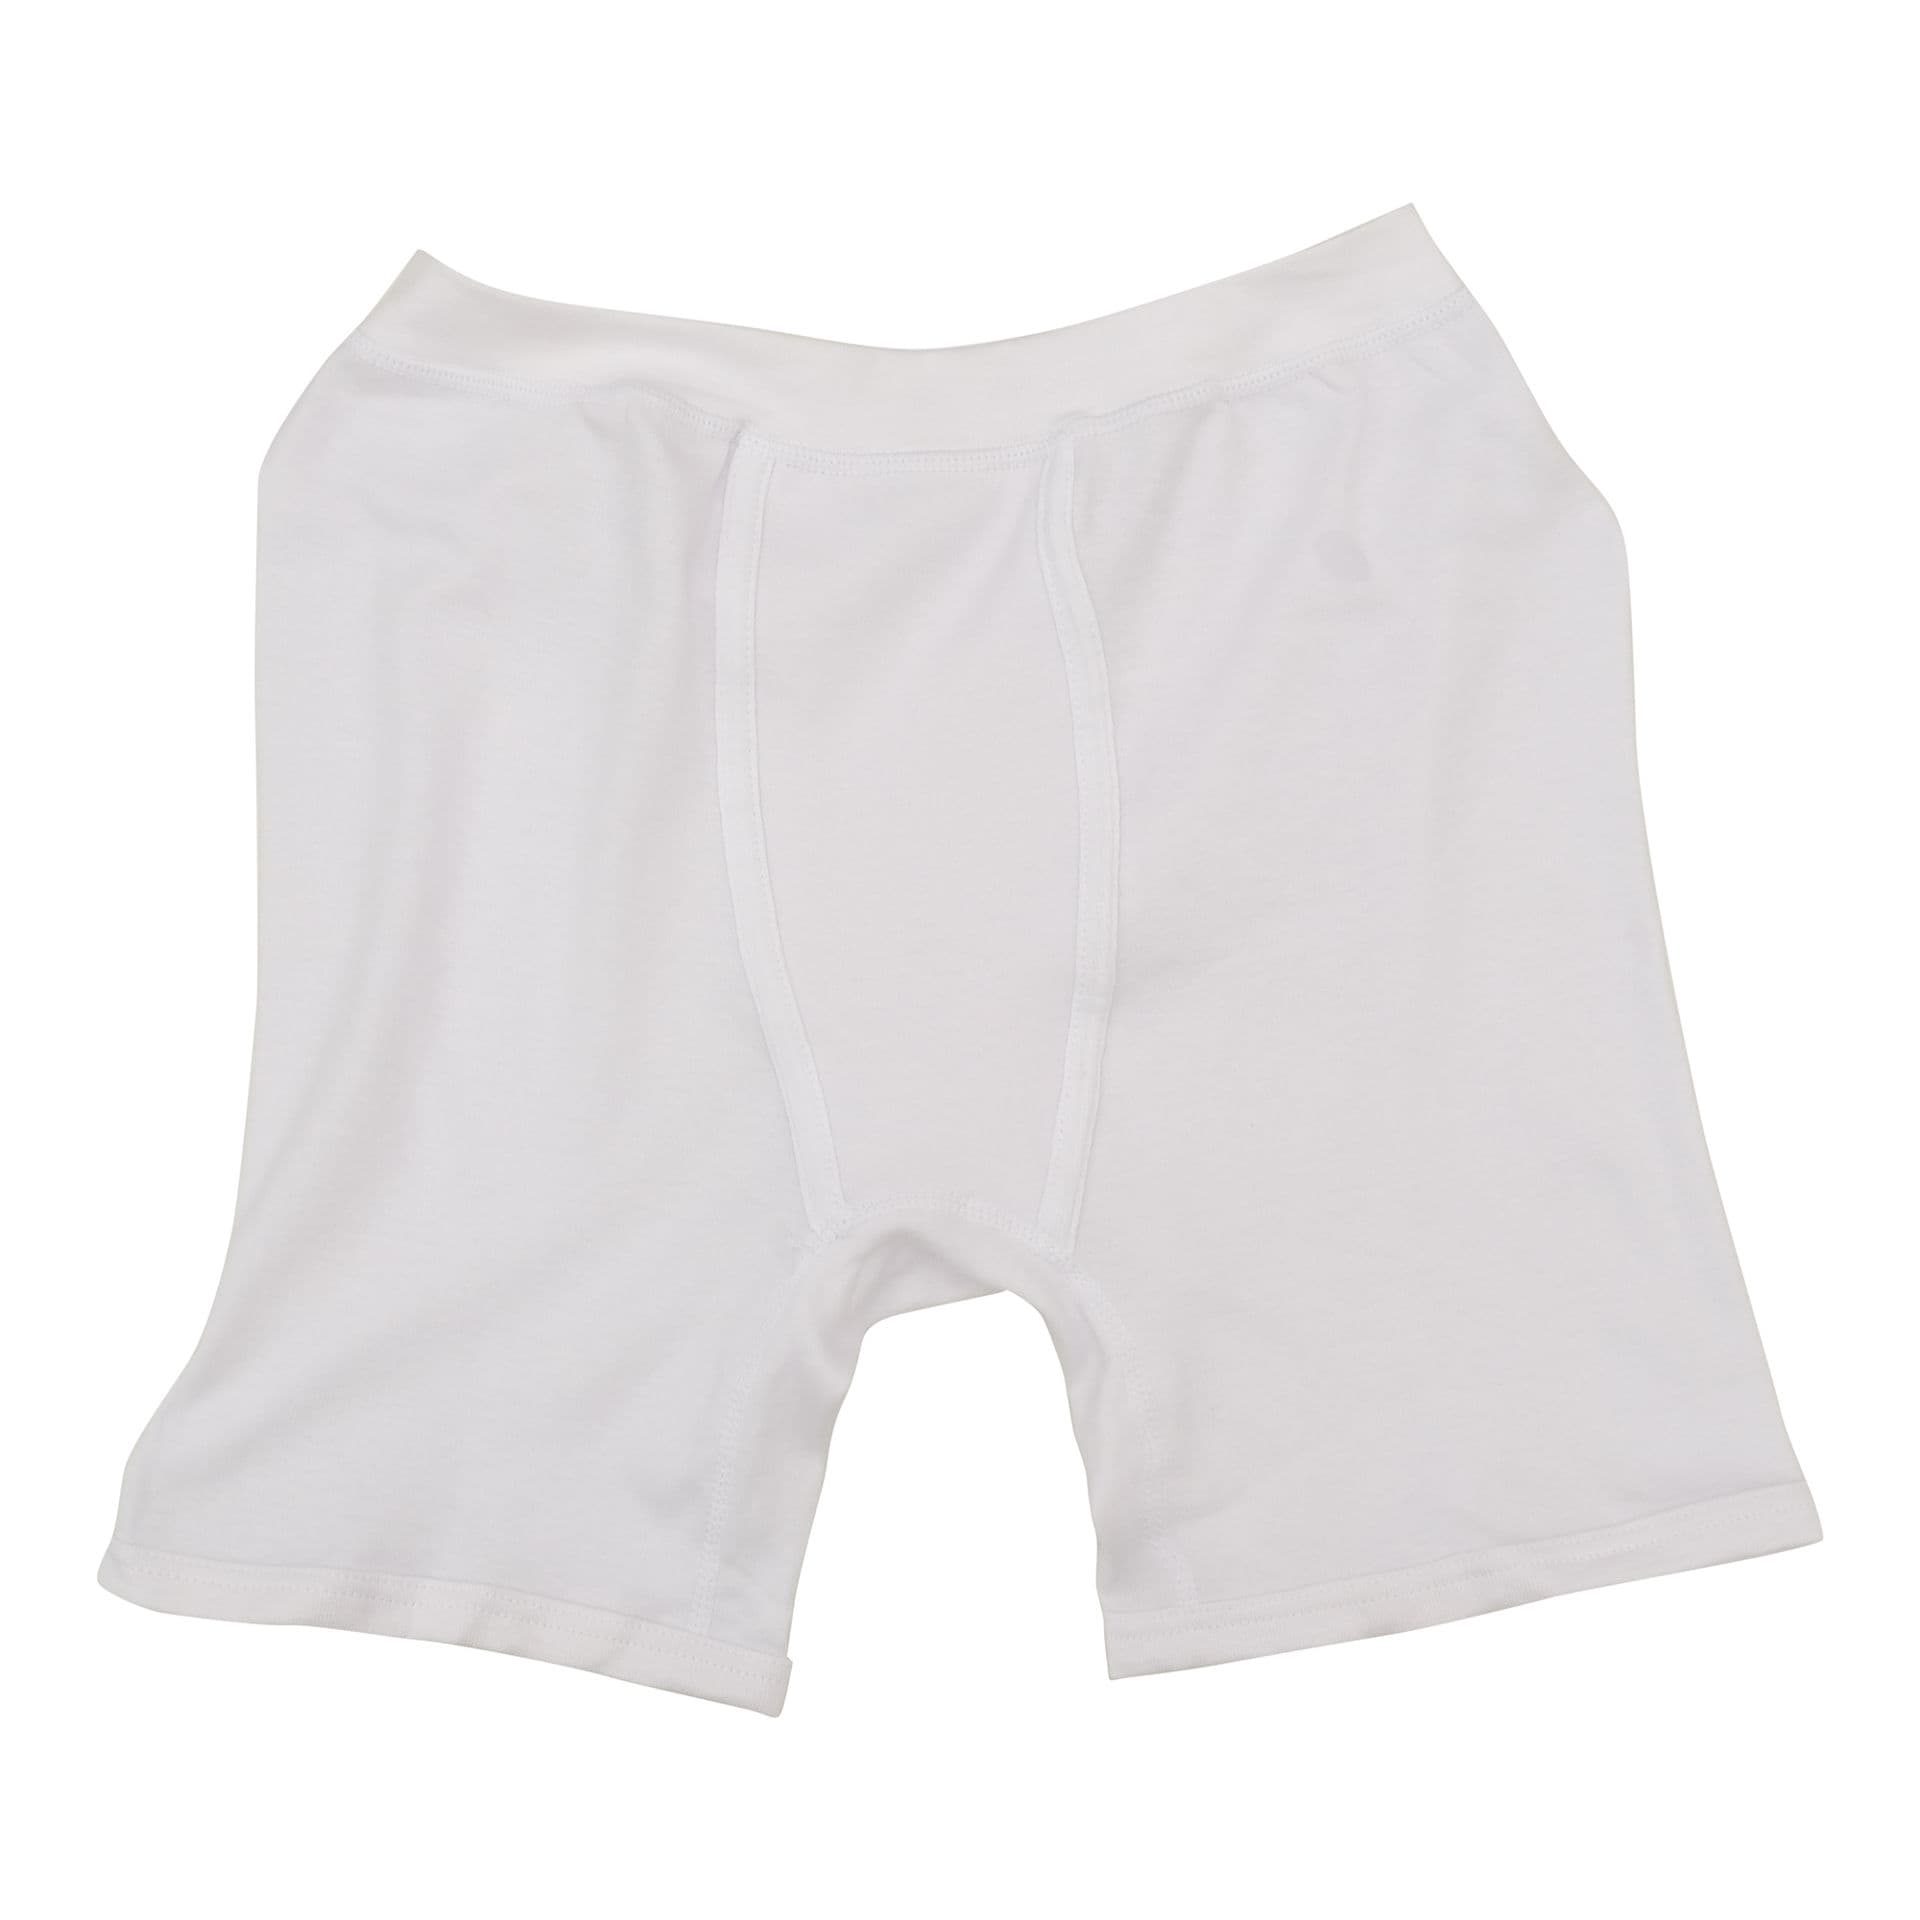 Shop AL ASEEL Al Aseel 100% Cotton Boys Underware Shorts, White ...